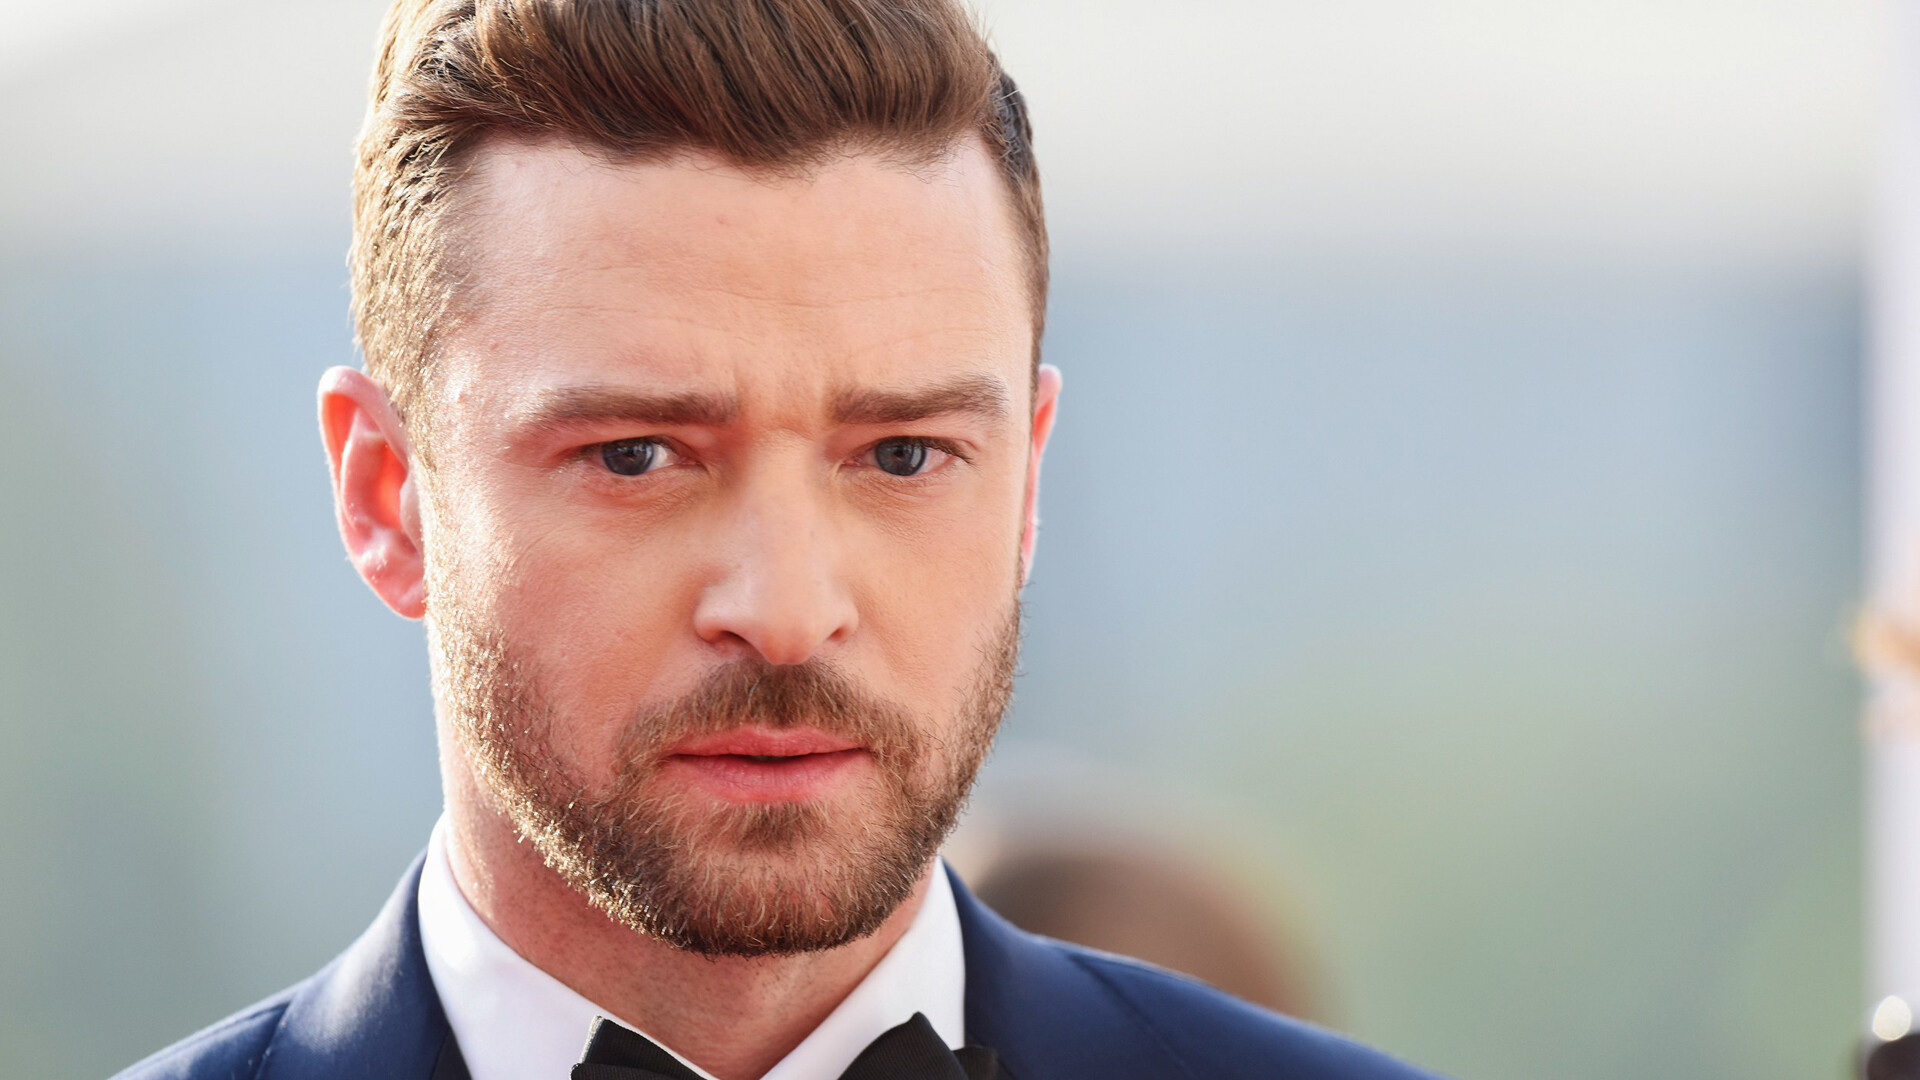 Justin Timberlake, High-quality wallpapers, Premium visuals, Celebrity photos, 1920x1080 Full HD Desktop